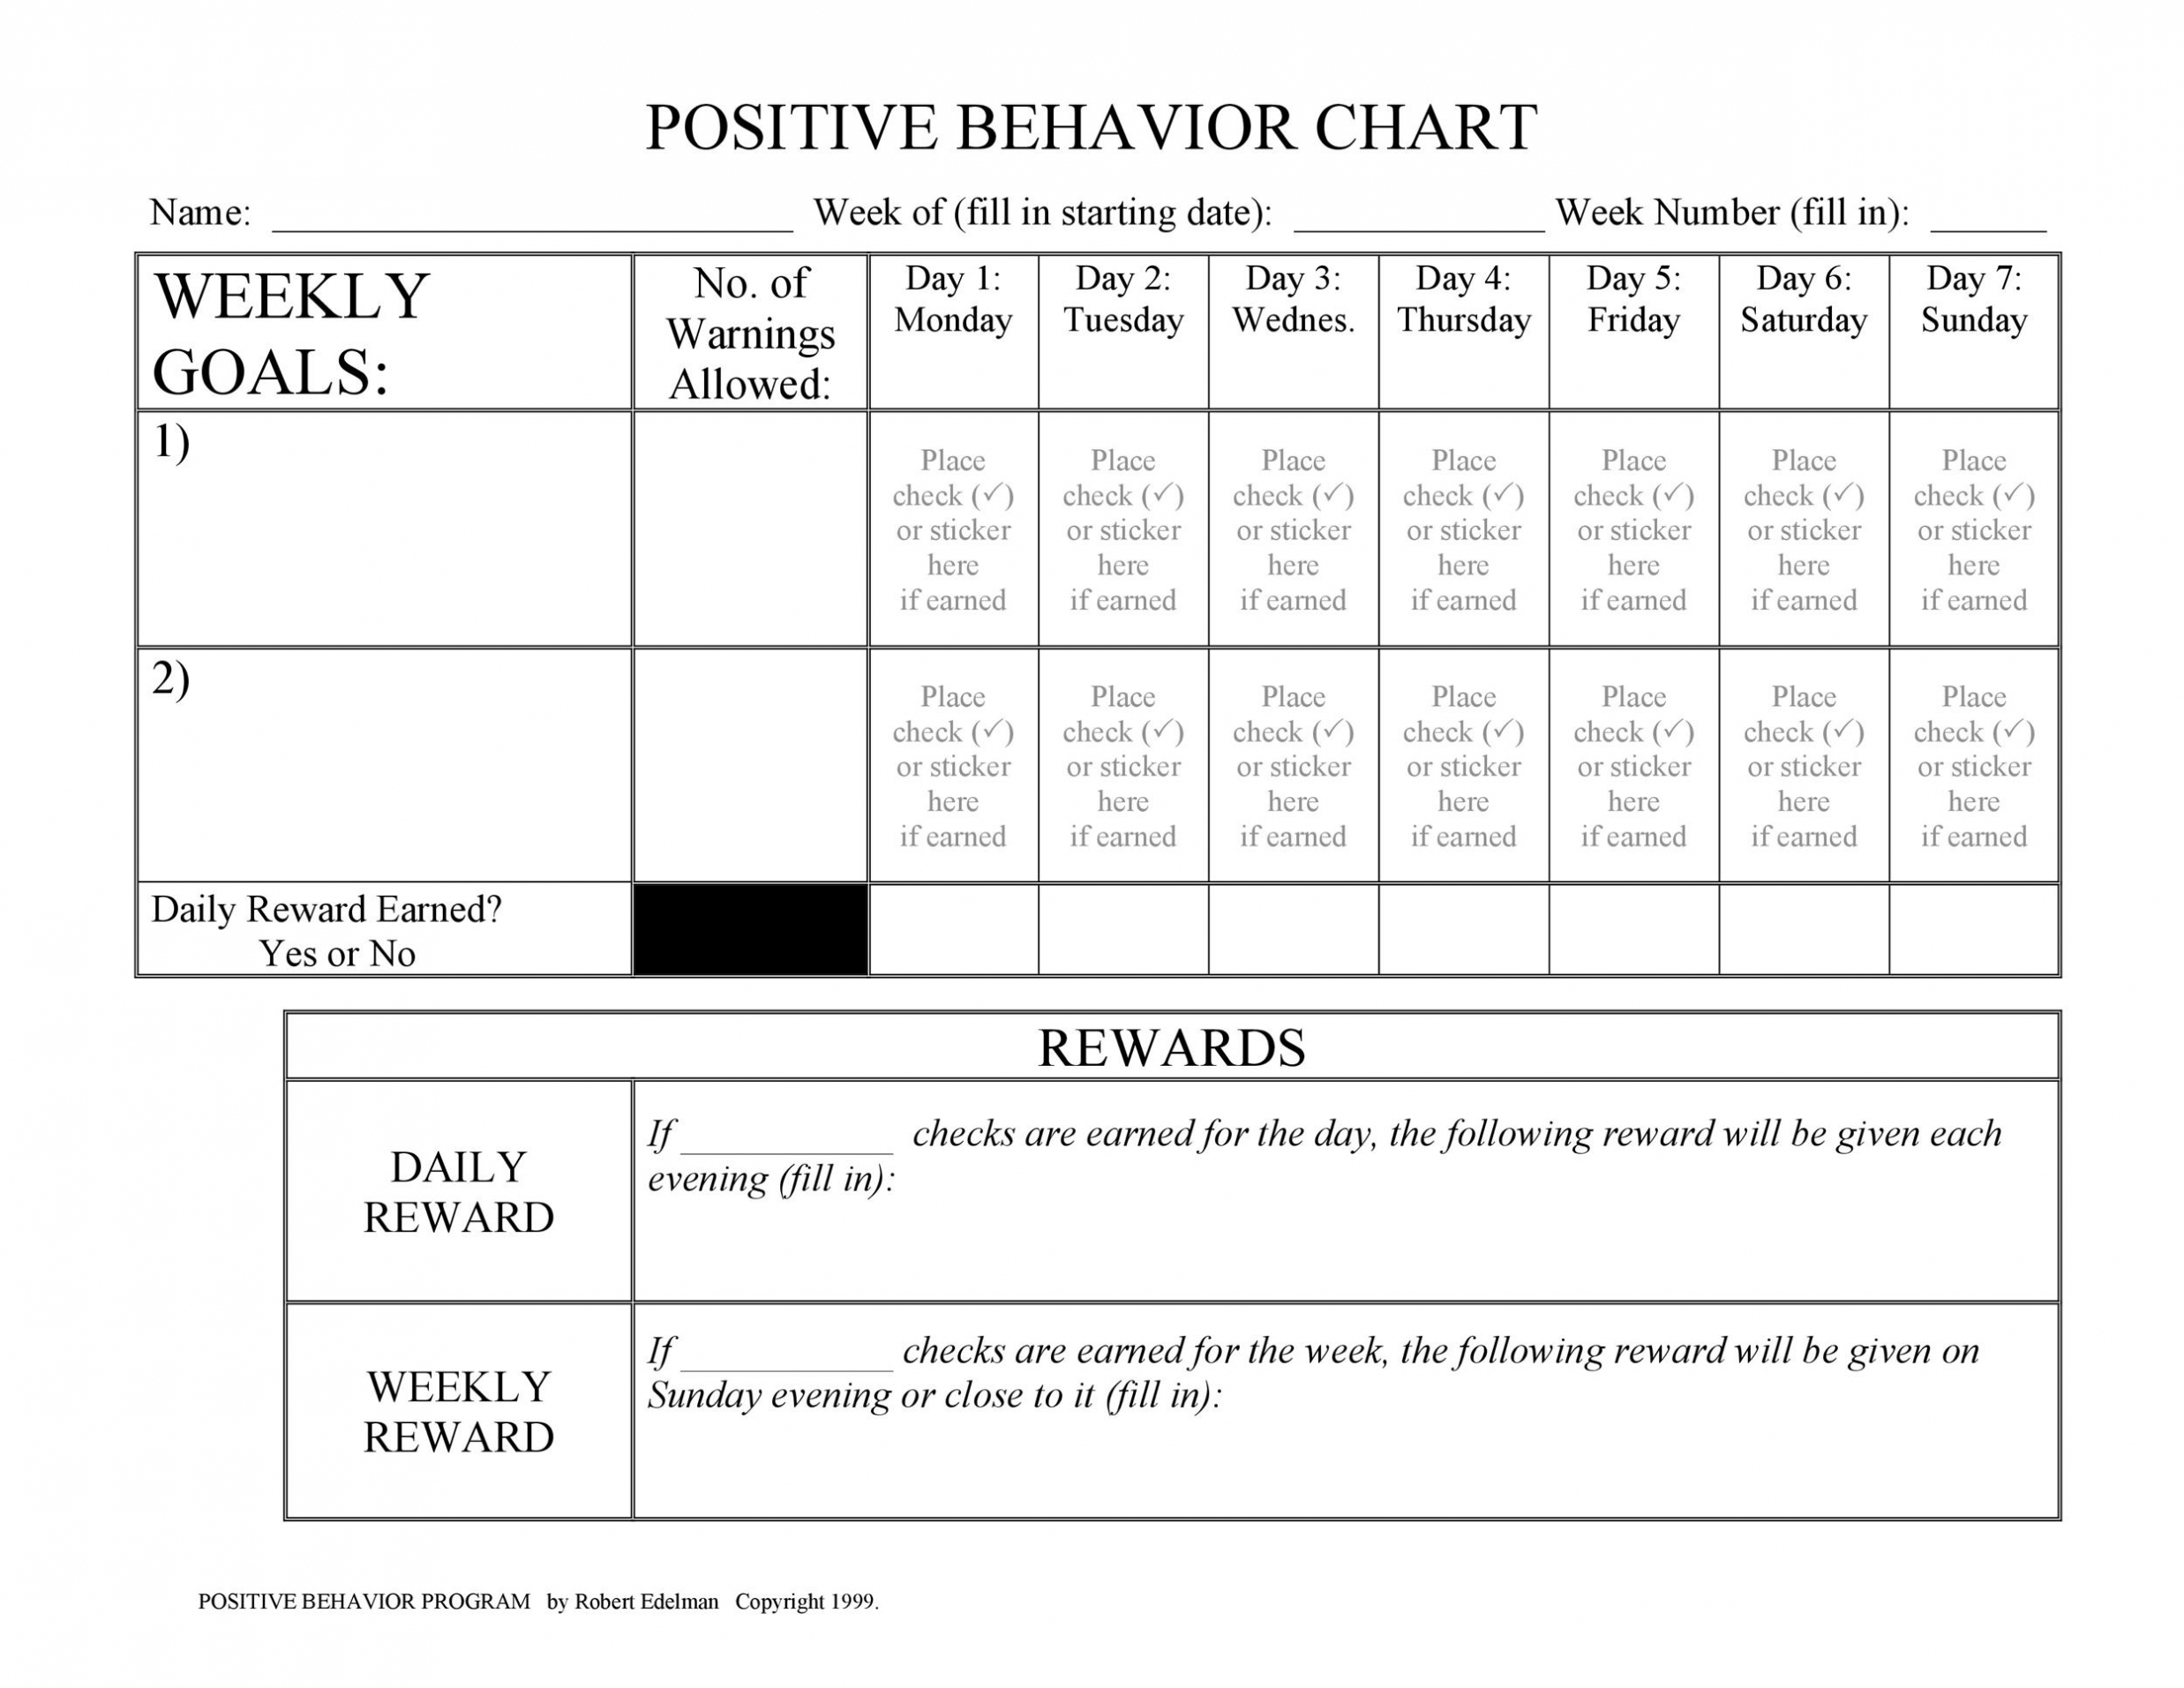 42 Printable Behavior Chart Templates [For Kids] ᐅ Templatelab Regarding Daily Behavior Report Template